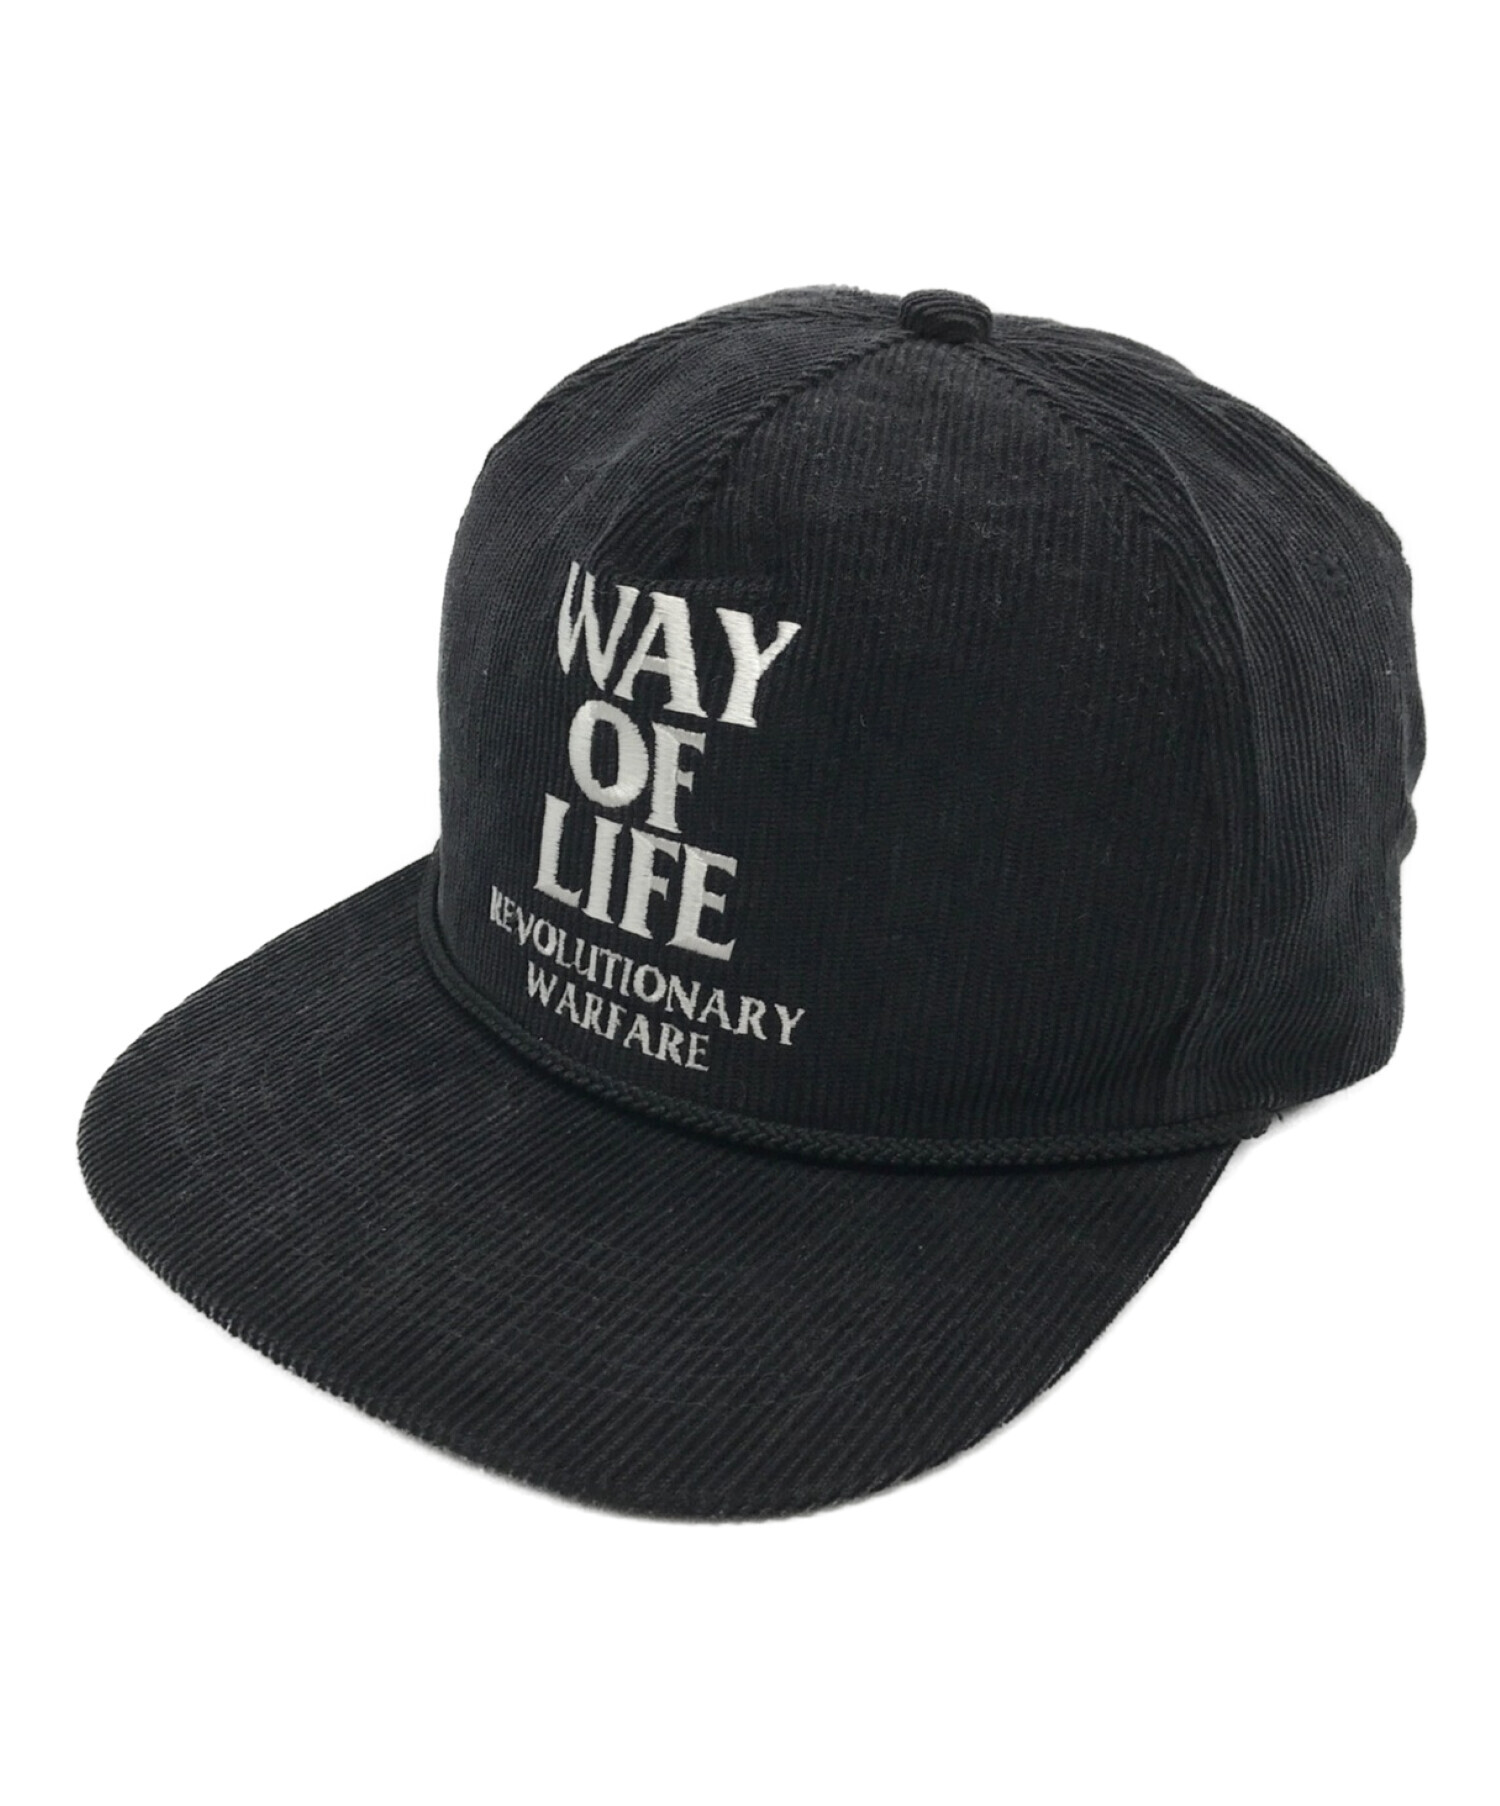 RATS CORDUROY CAP “WAY OF LIFE”